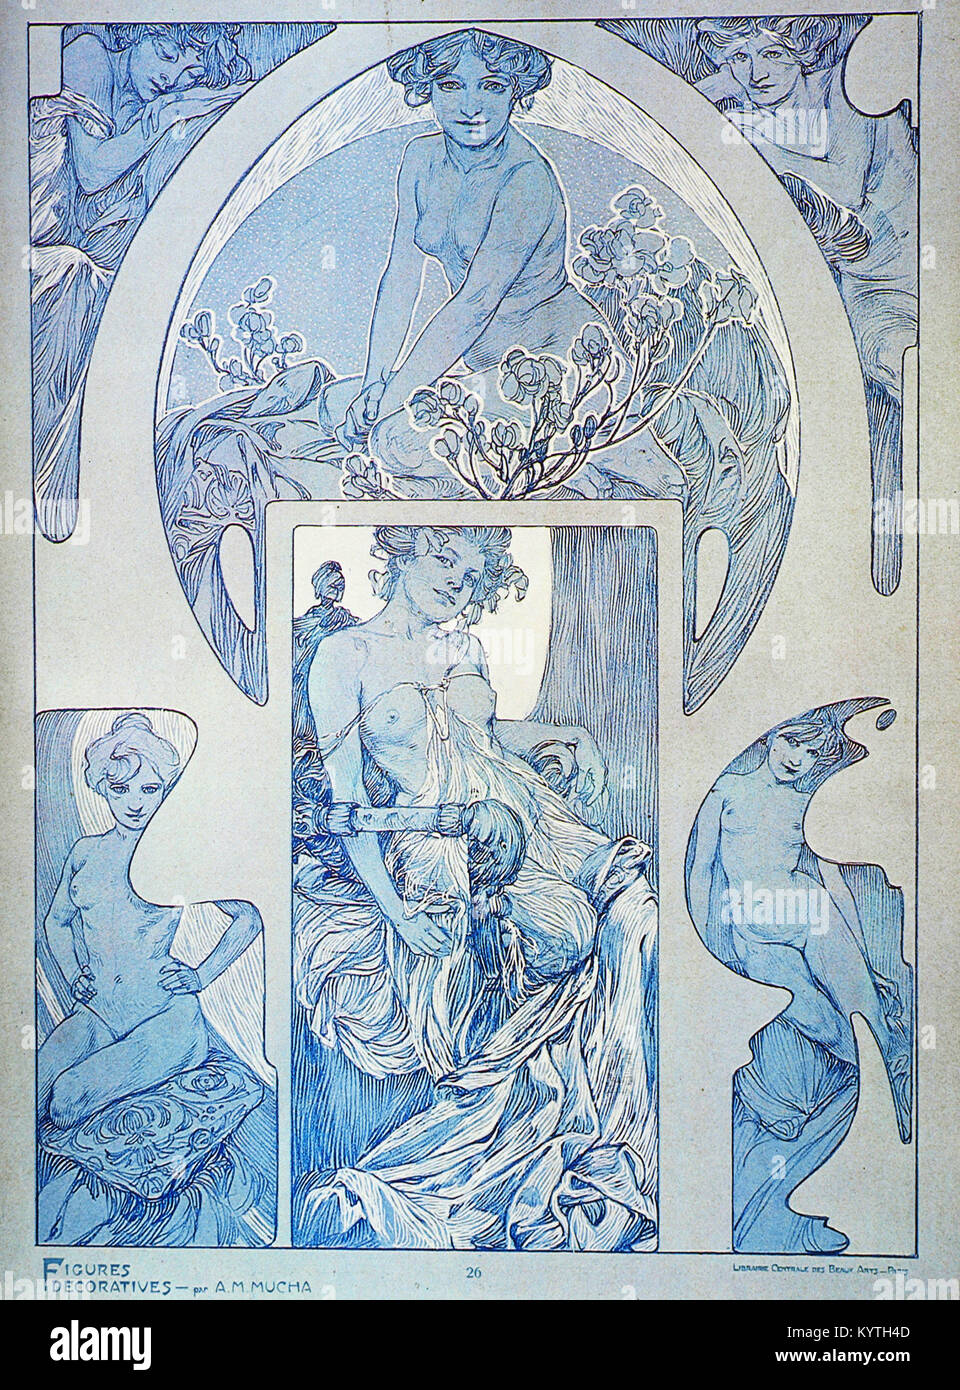 Alphonse Maria Mucha - Chiffres 1939 1860 décoratives - femme bleu ...